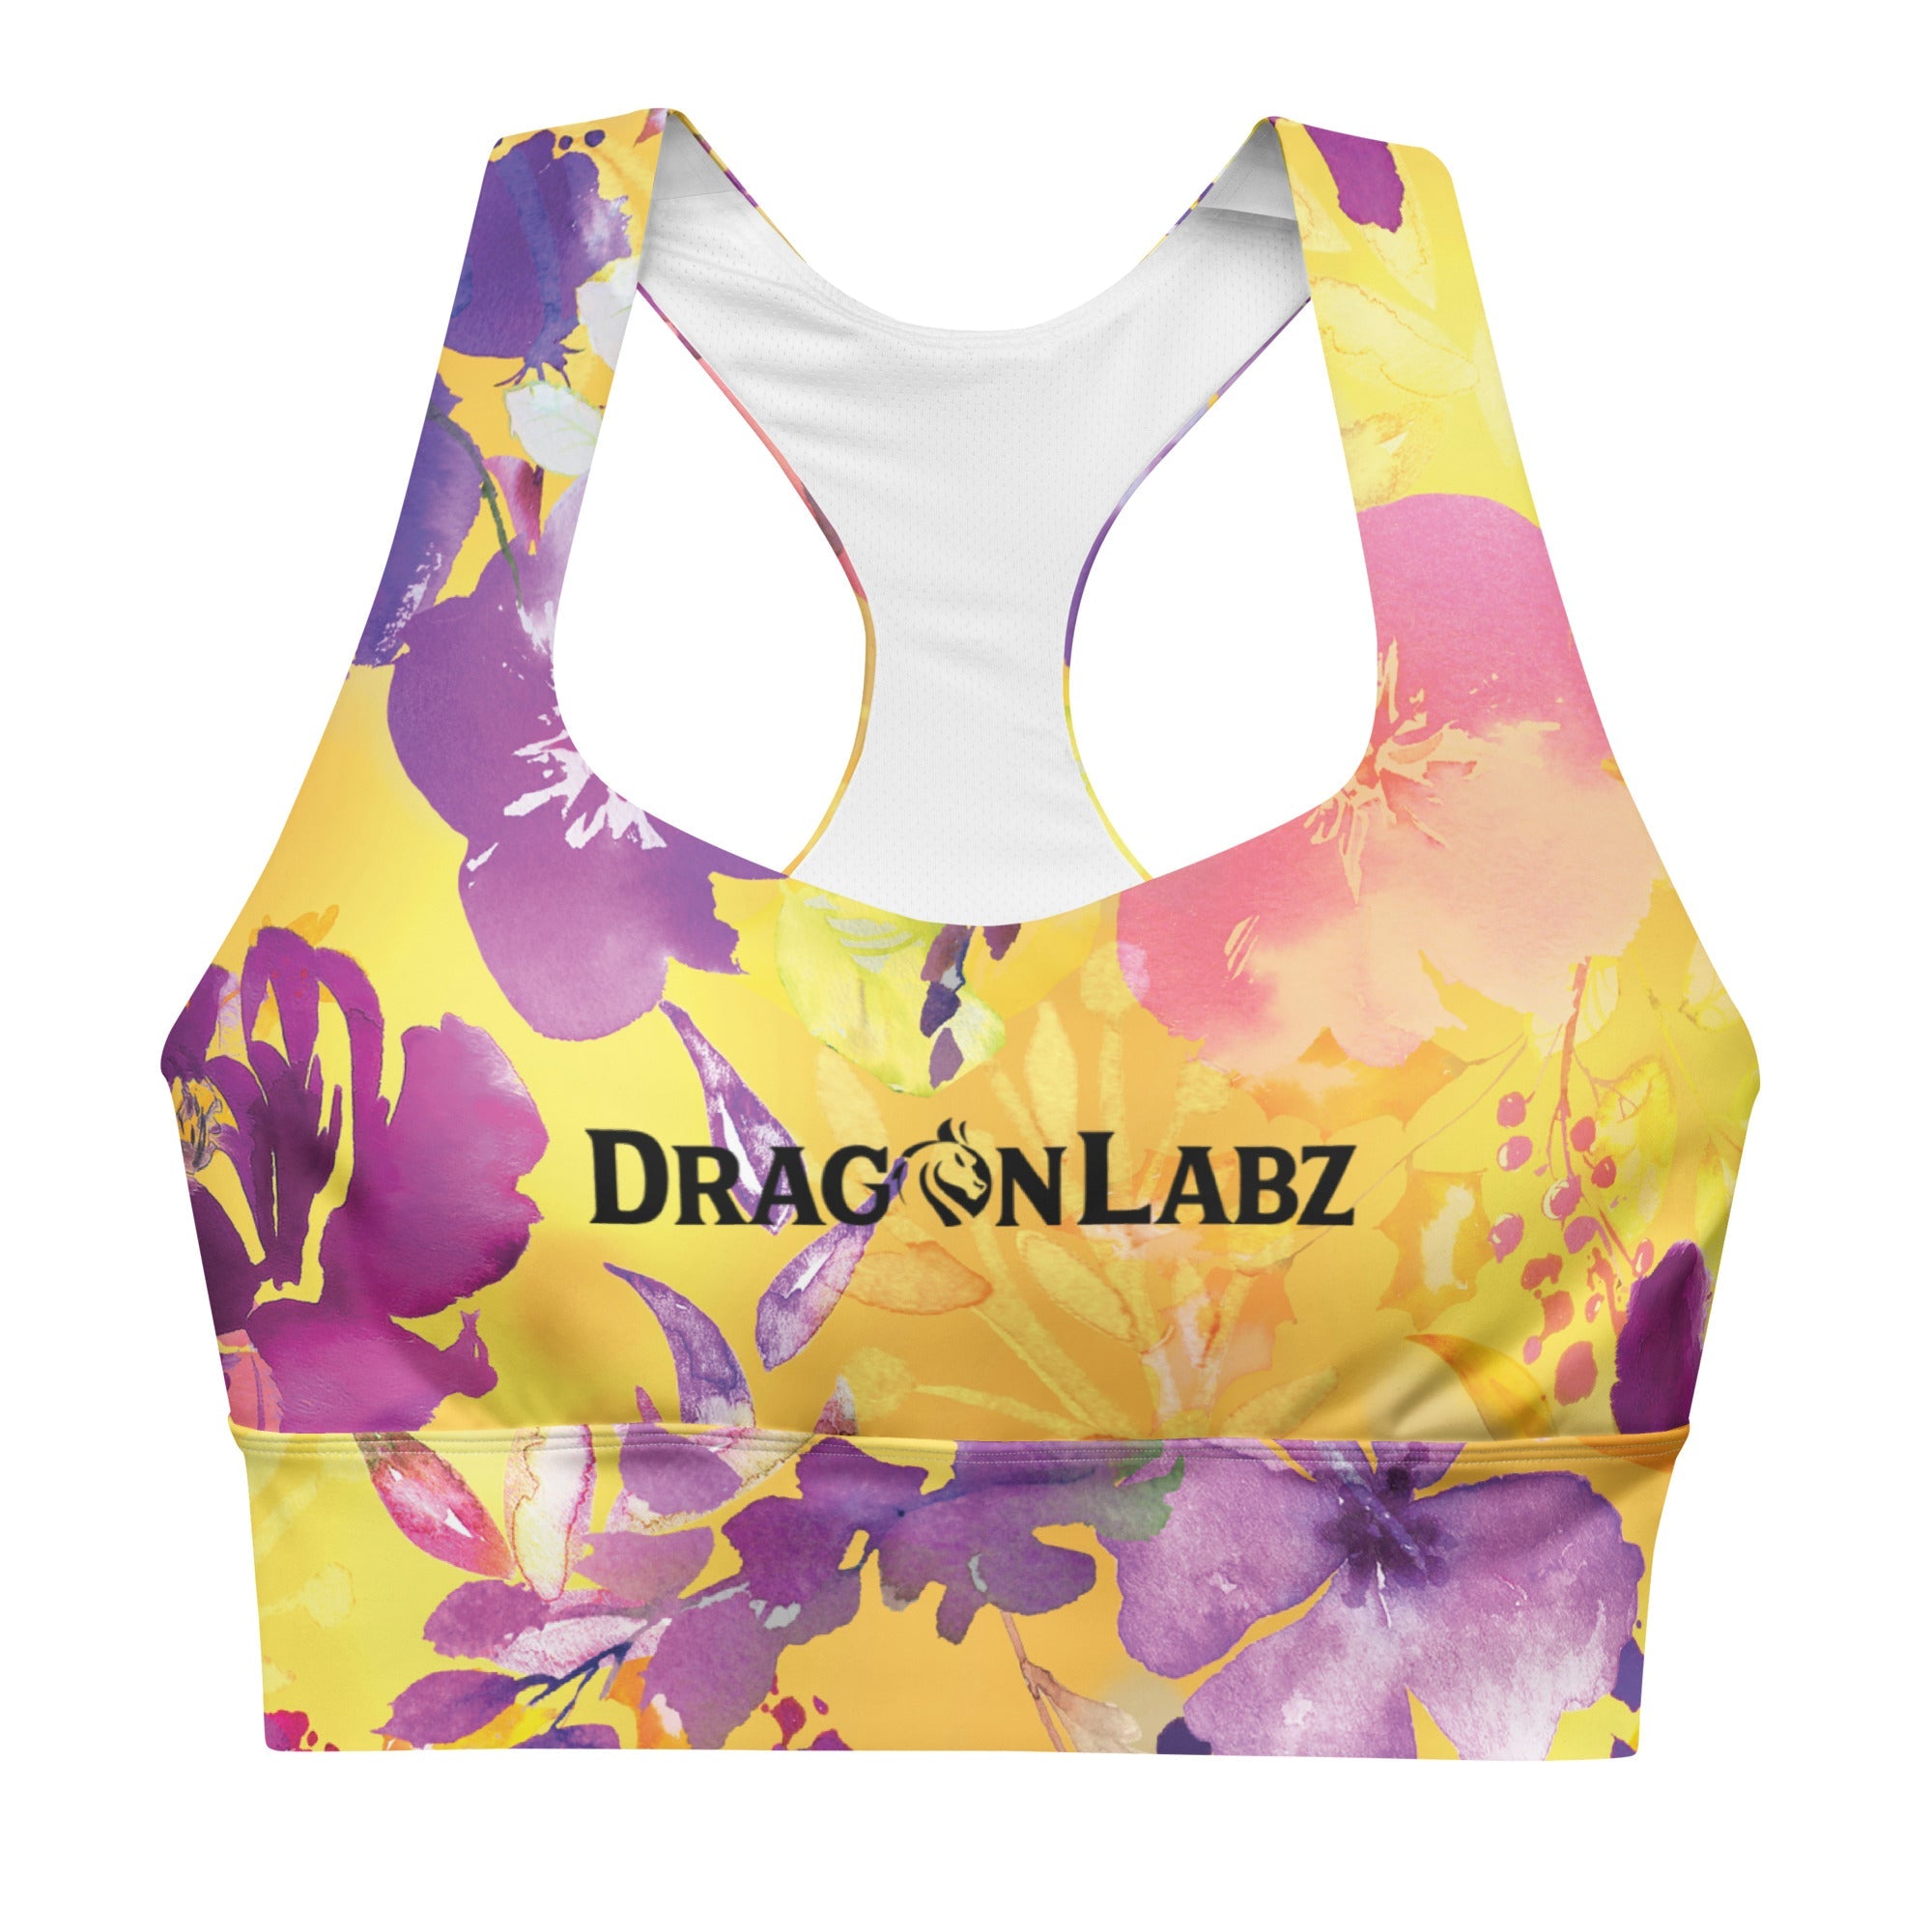 DragonLabz Floral Sports Bra - Krazy Muscle Nutrition Krazy Muscle Nutrition8877730_12290